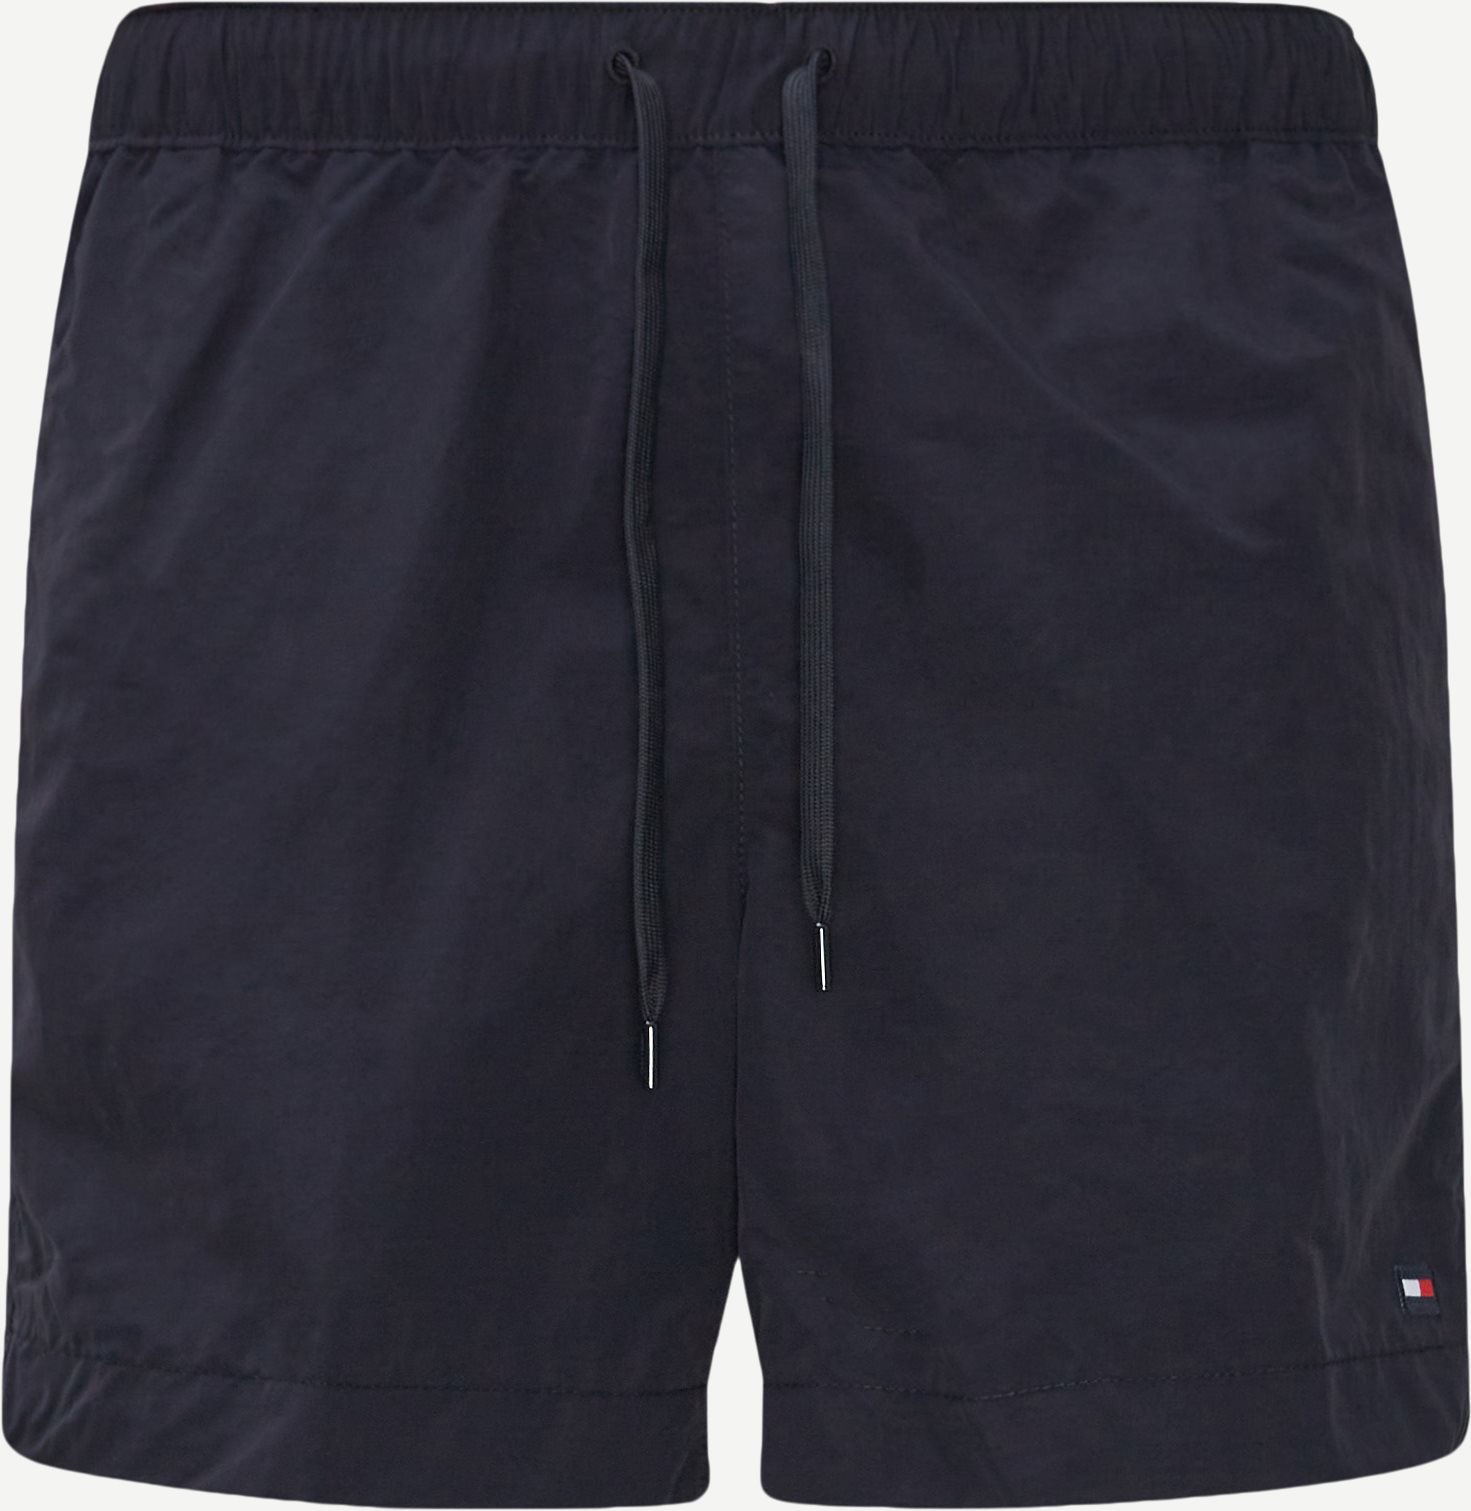 Shorts - Regular fit - Blue